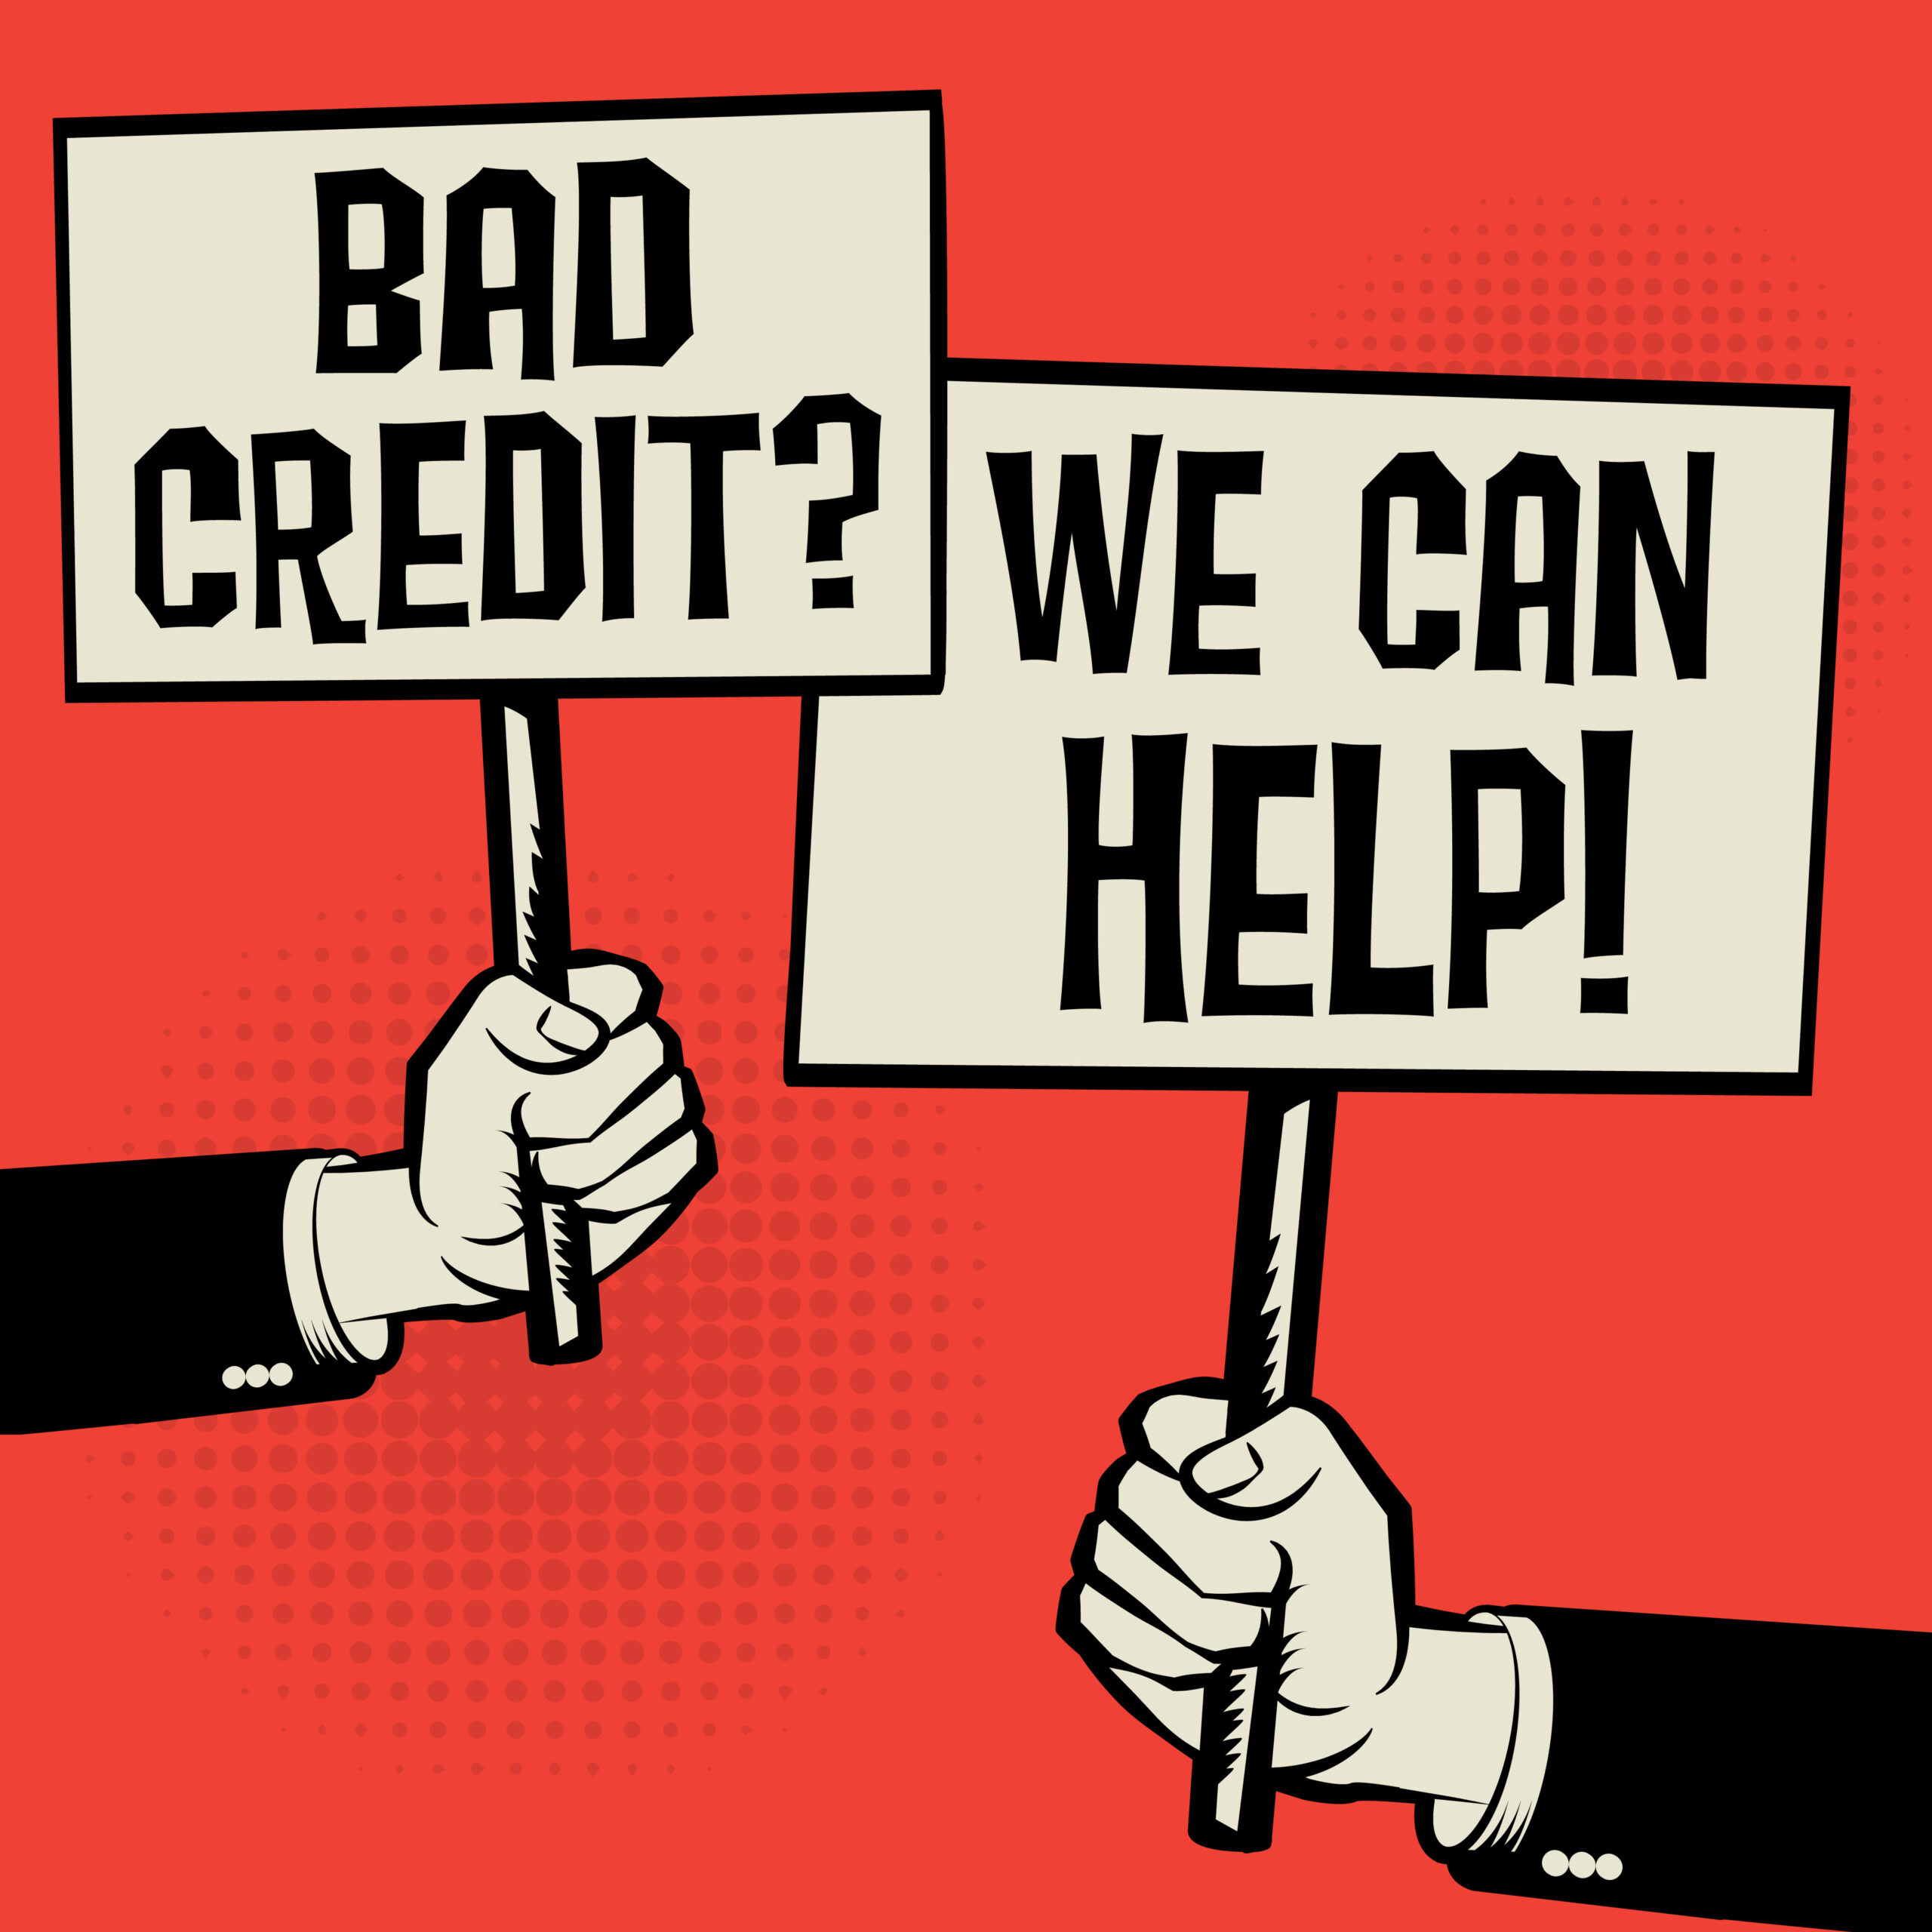 need bad credit help, let us help you